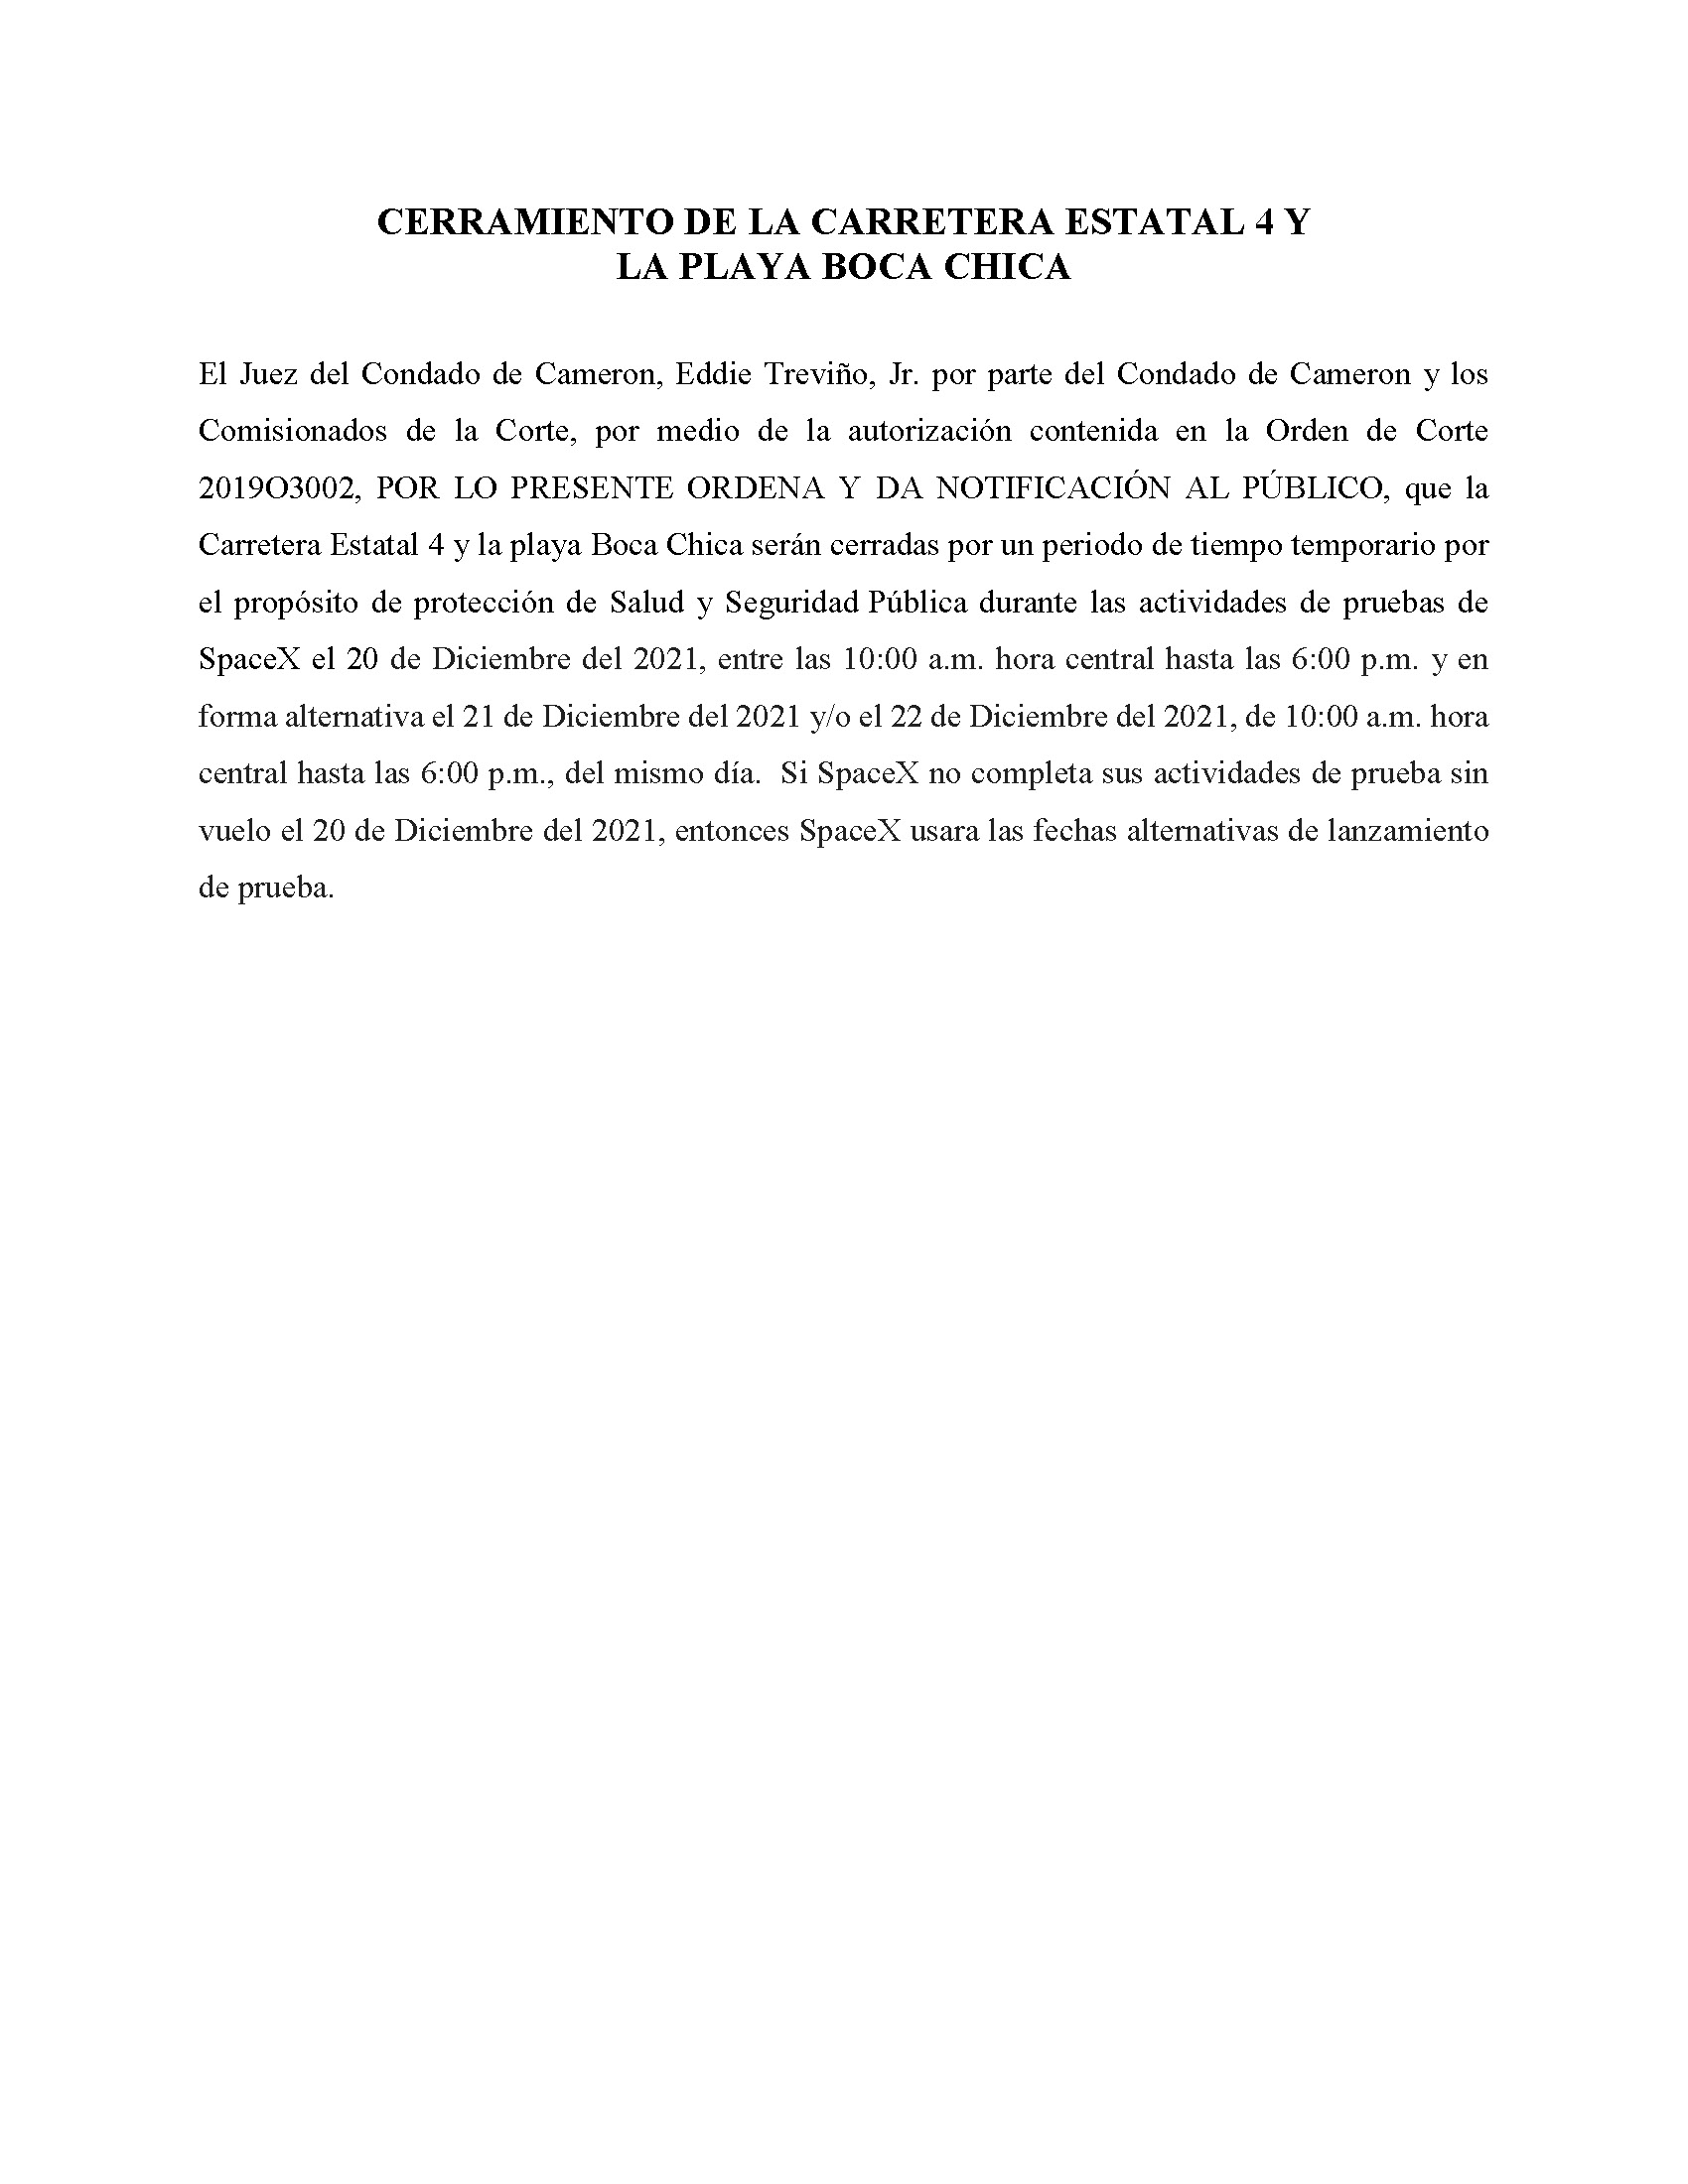 ORDER.CLOSURE OF HIGHWAY 4 Y LA PLAYA BOCA CHICA.SPANISH.12.20.2021